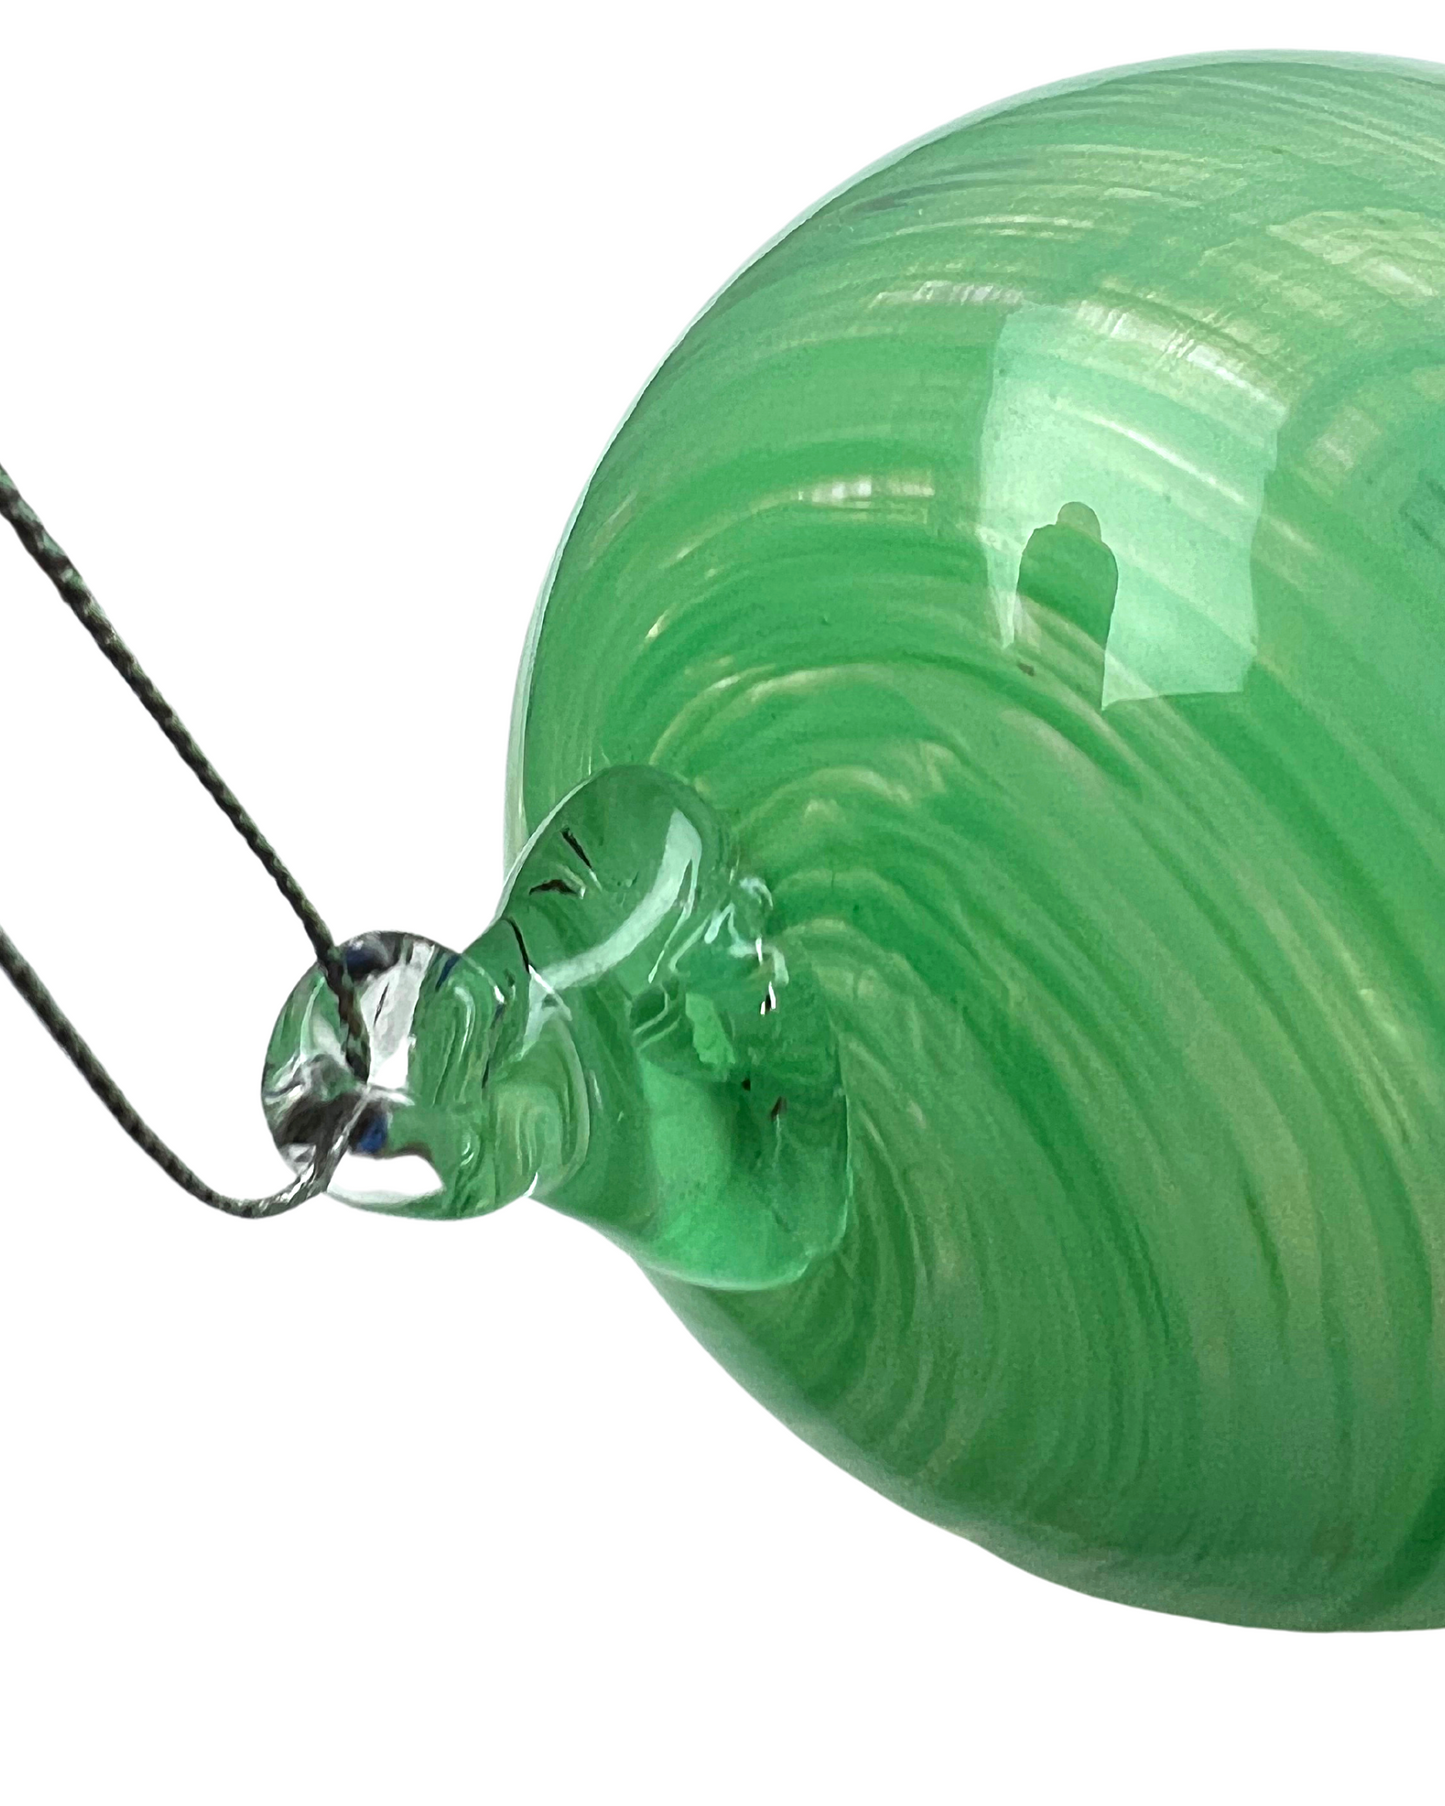 Vintage Green Swirl Hand Blown Glass Ornament 5” x 4”